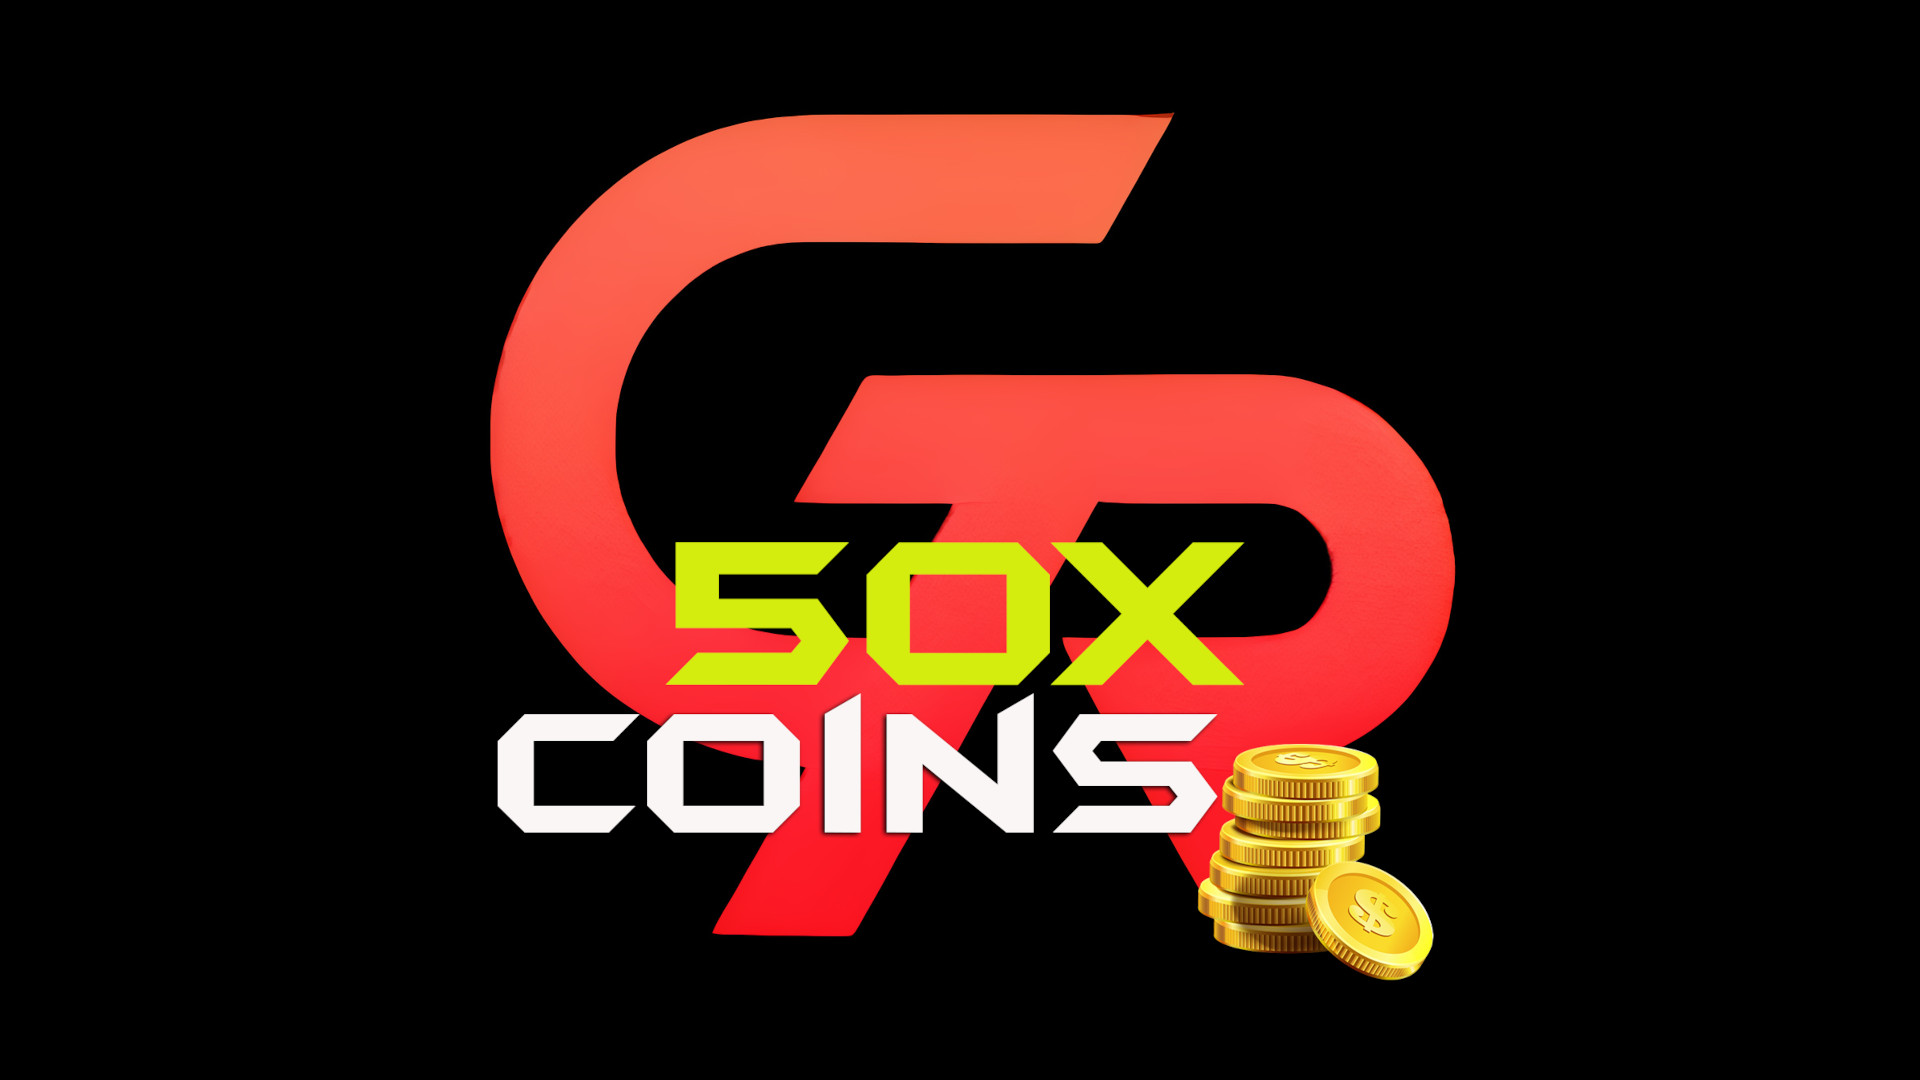 50x Glory Coins